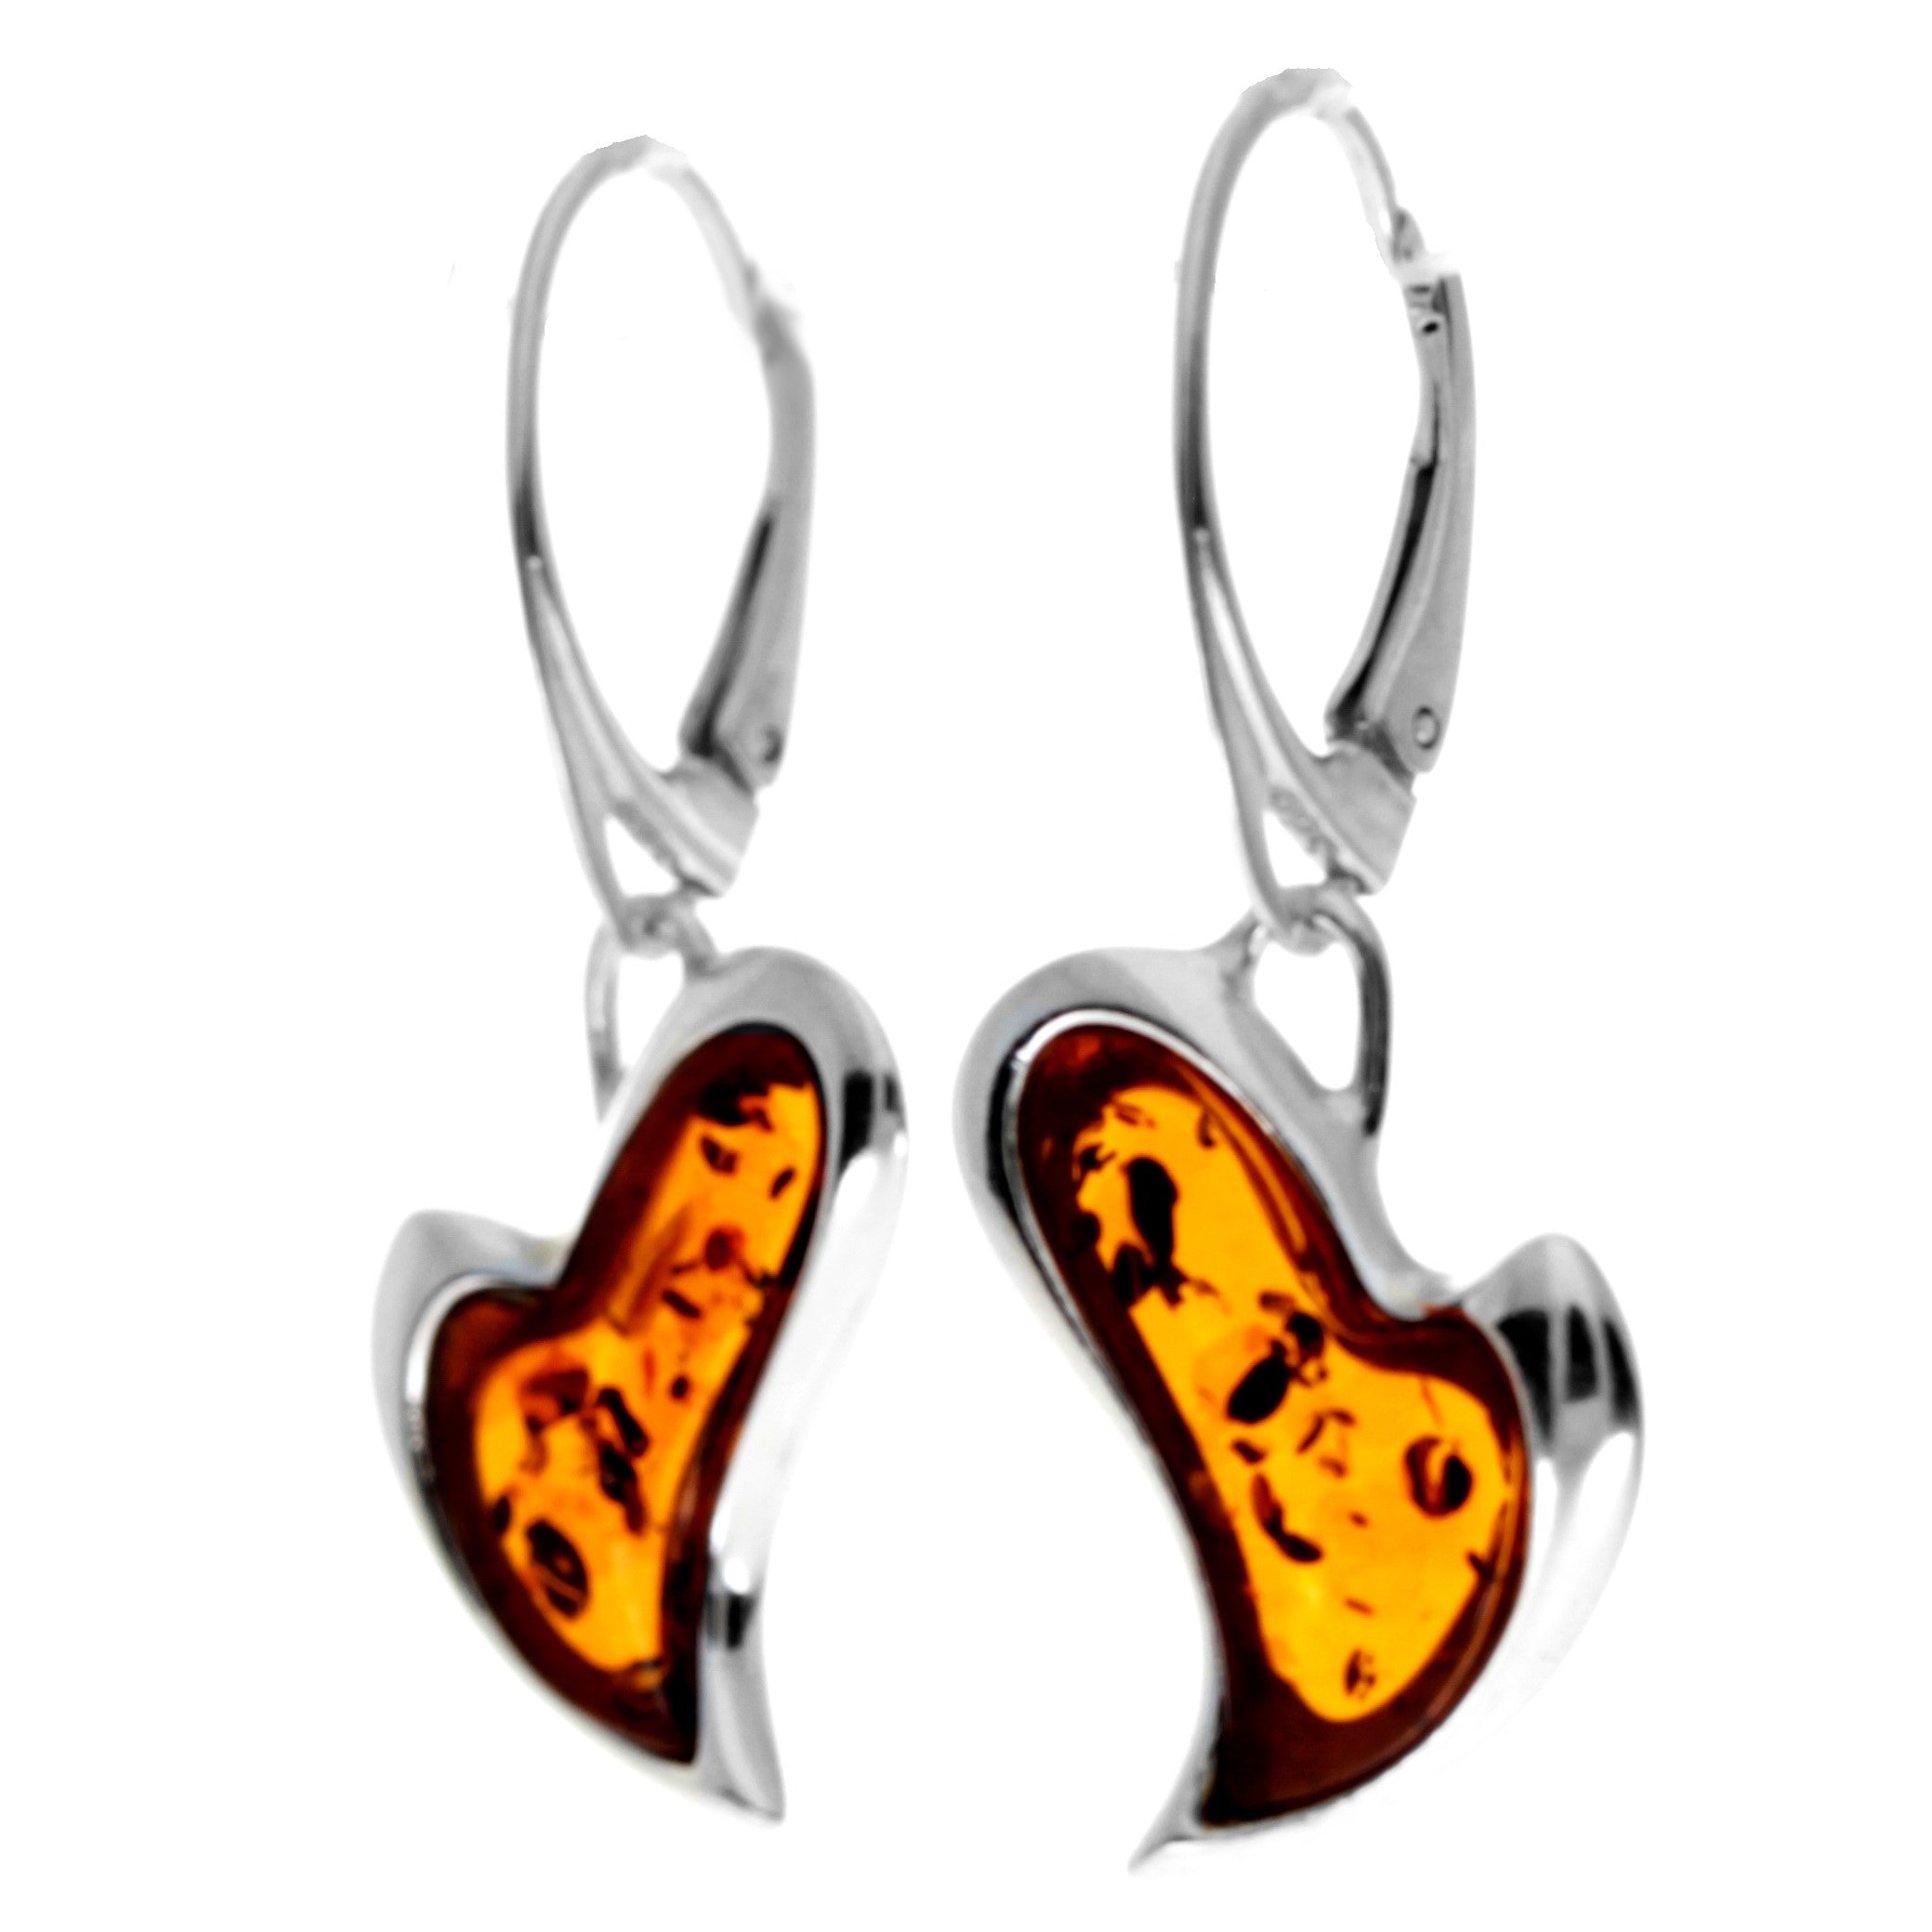 925 Sterling Silver & Genuine Baltic Amber Drop Modern Hearts Earrings - AC005D